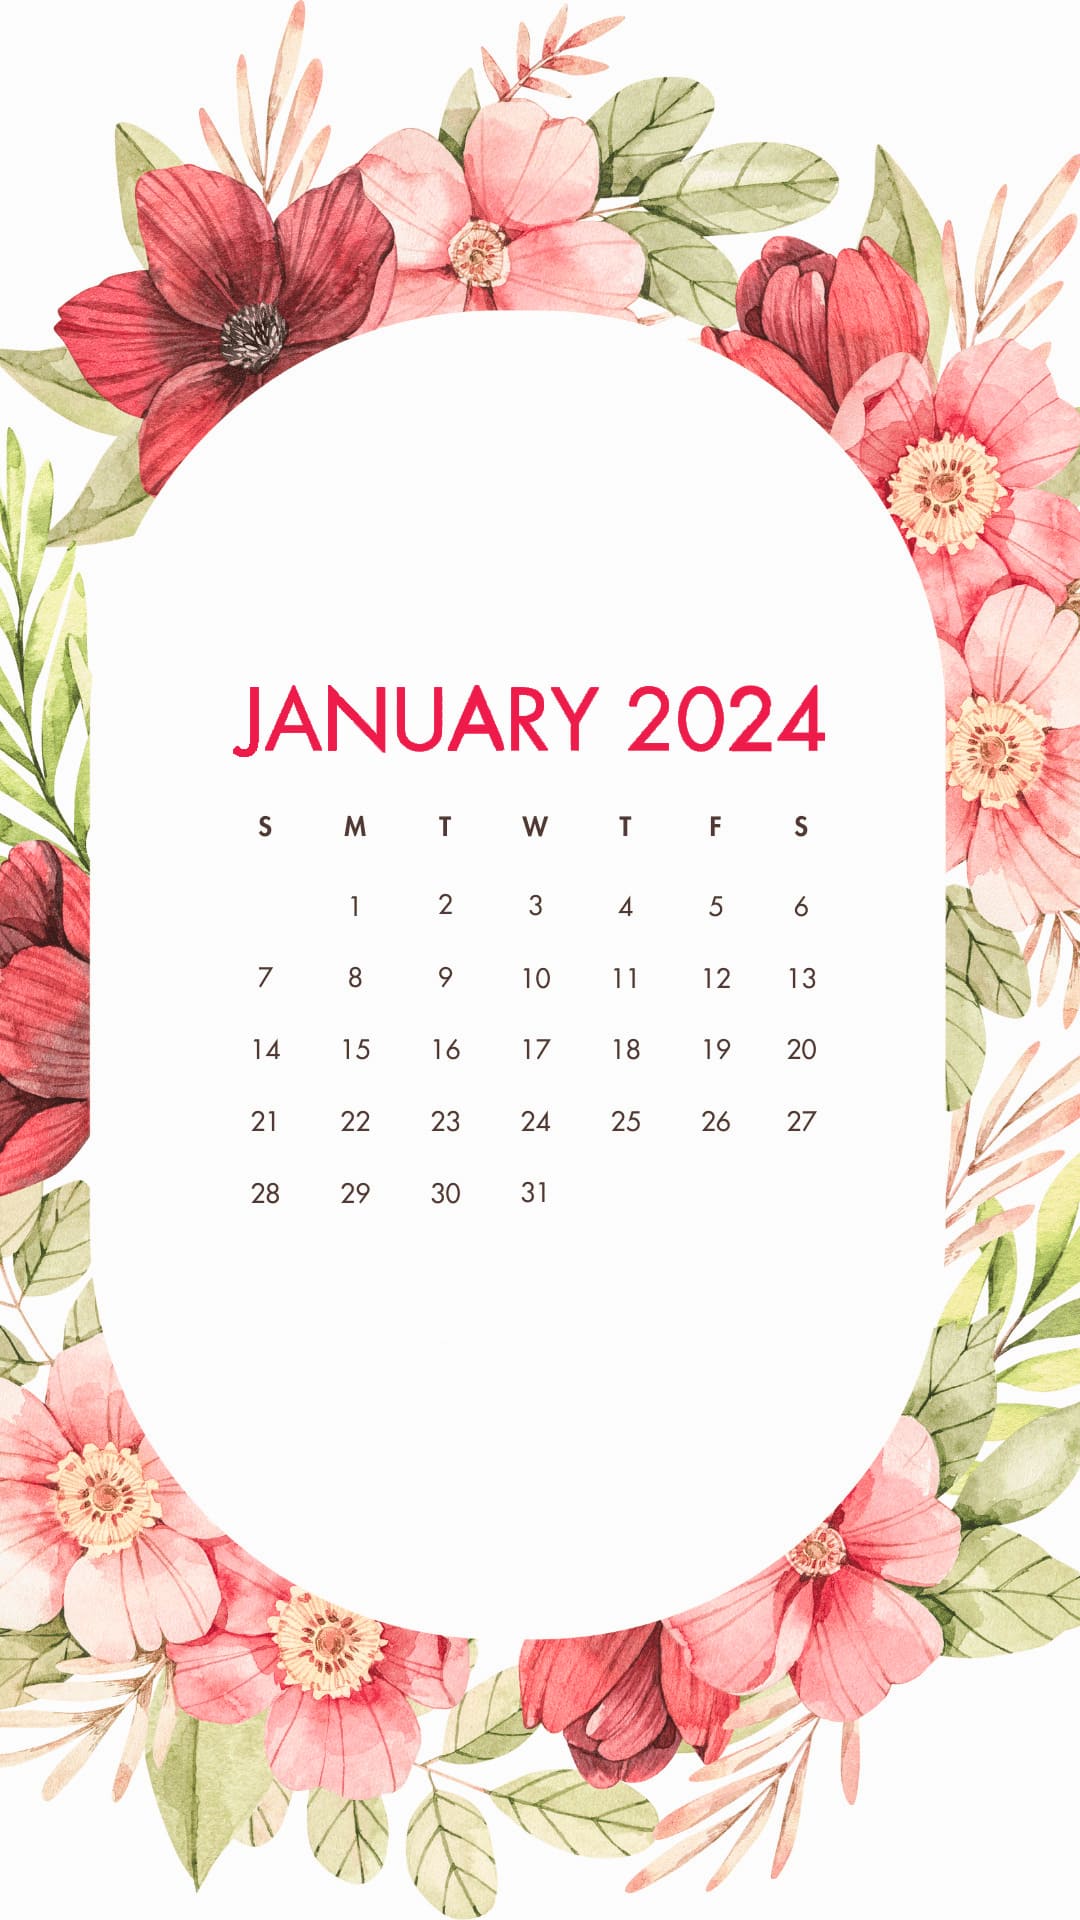 January 2024 Calendar Wallpaper - TubeWP